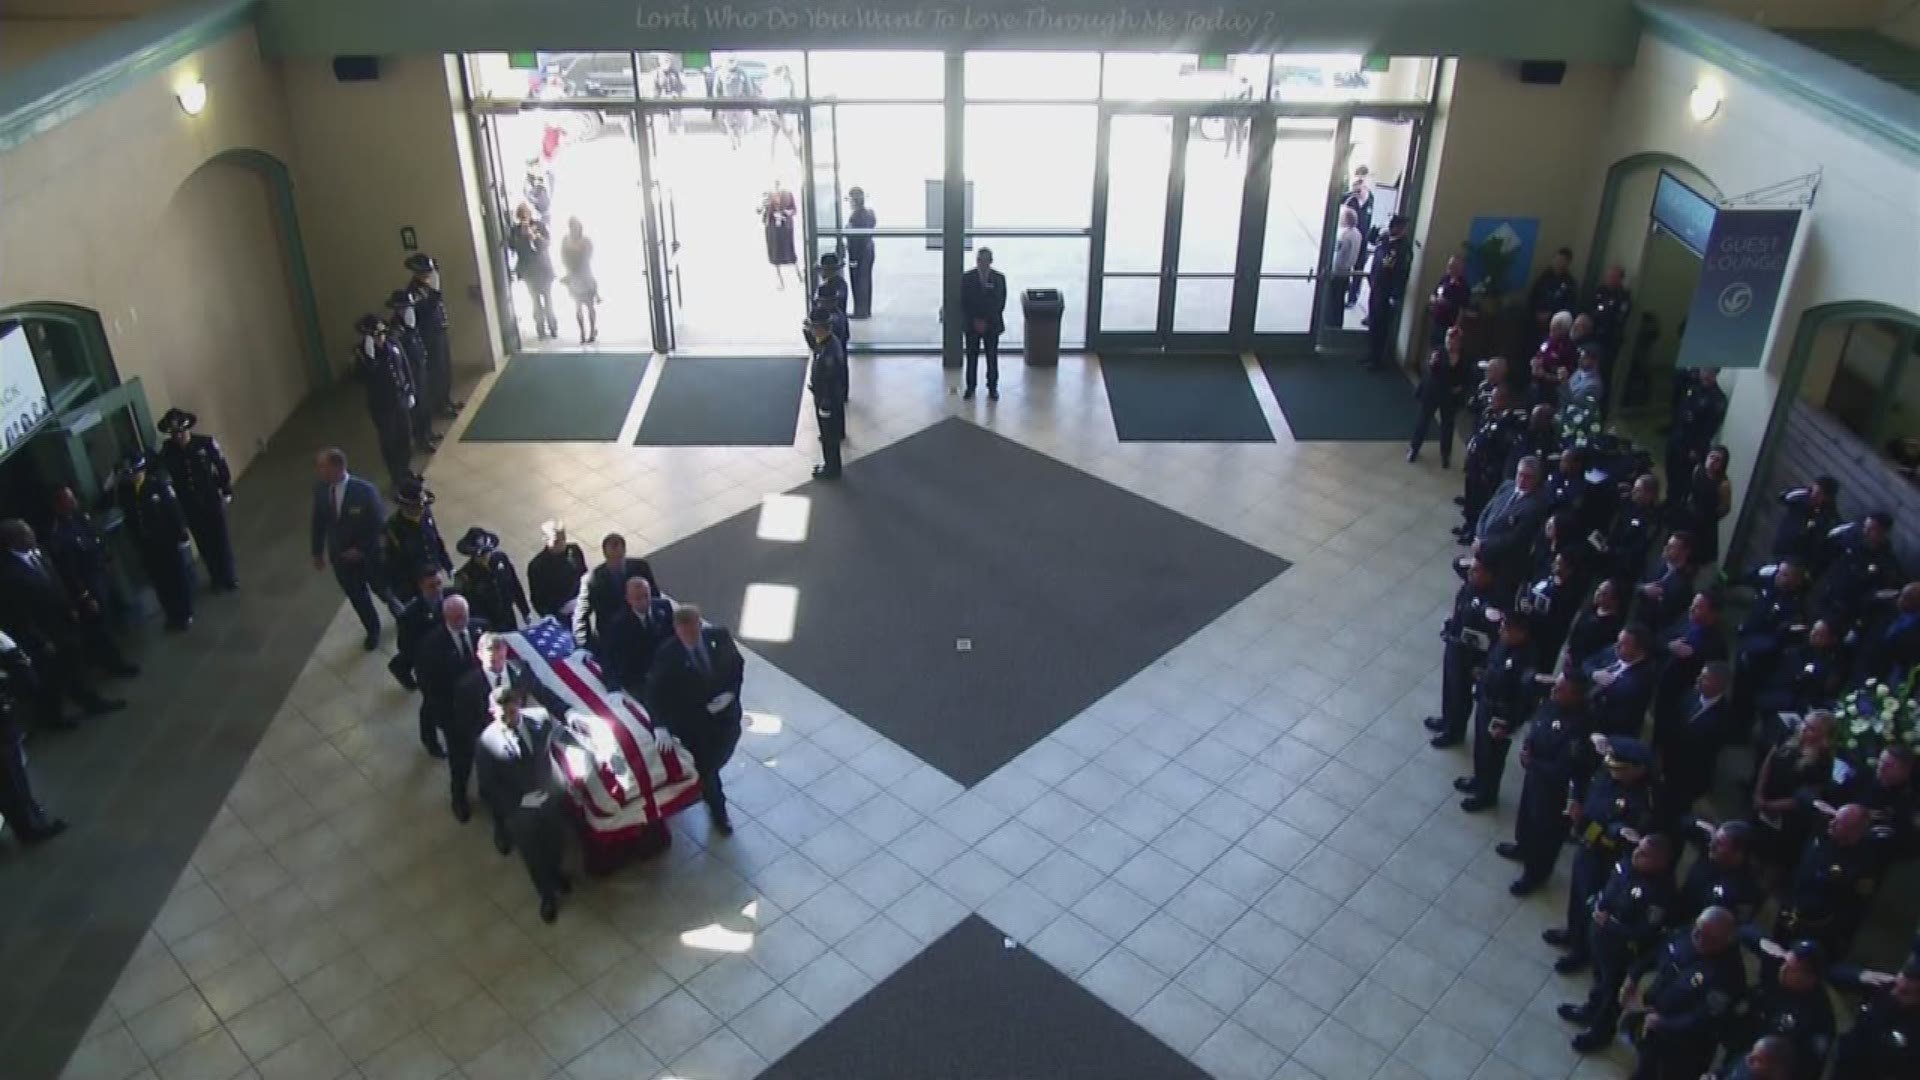 The family of fallen Sacramento Police Officer Tara O'Sullivan and her casket arrive at her memorial service in Roseville, California.